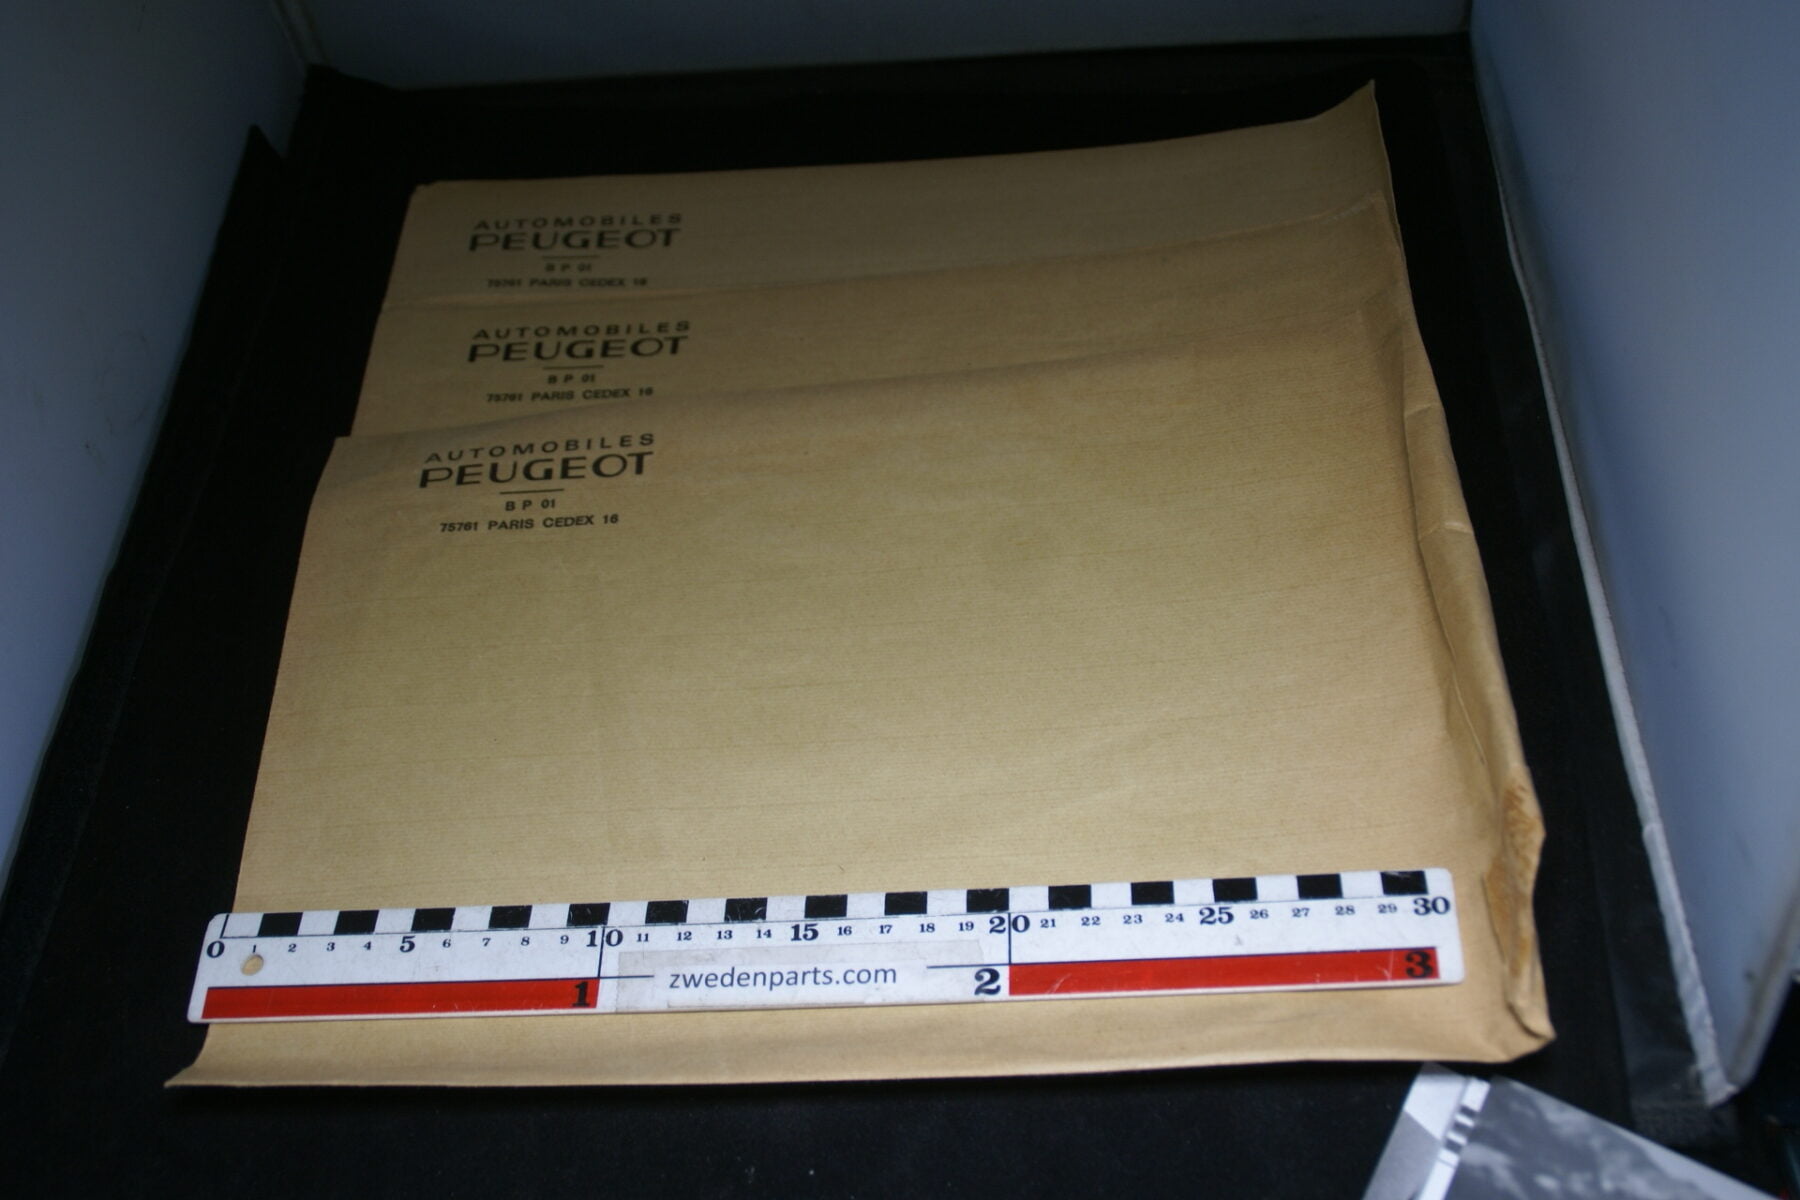 DSC00396 1997 origineel Peugeot persmap 3 enveloppen met foto's-e5a0739a